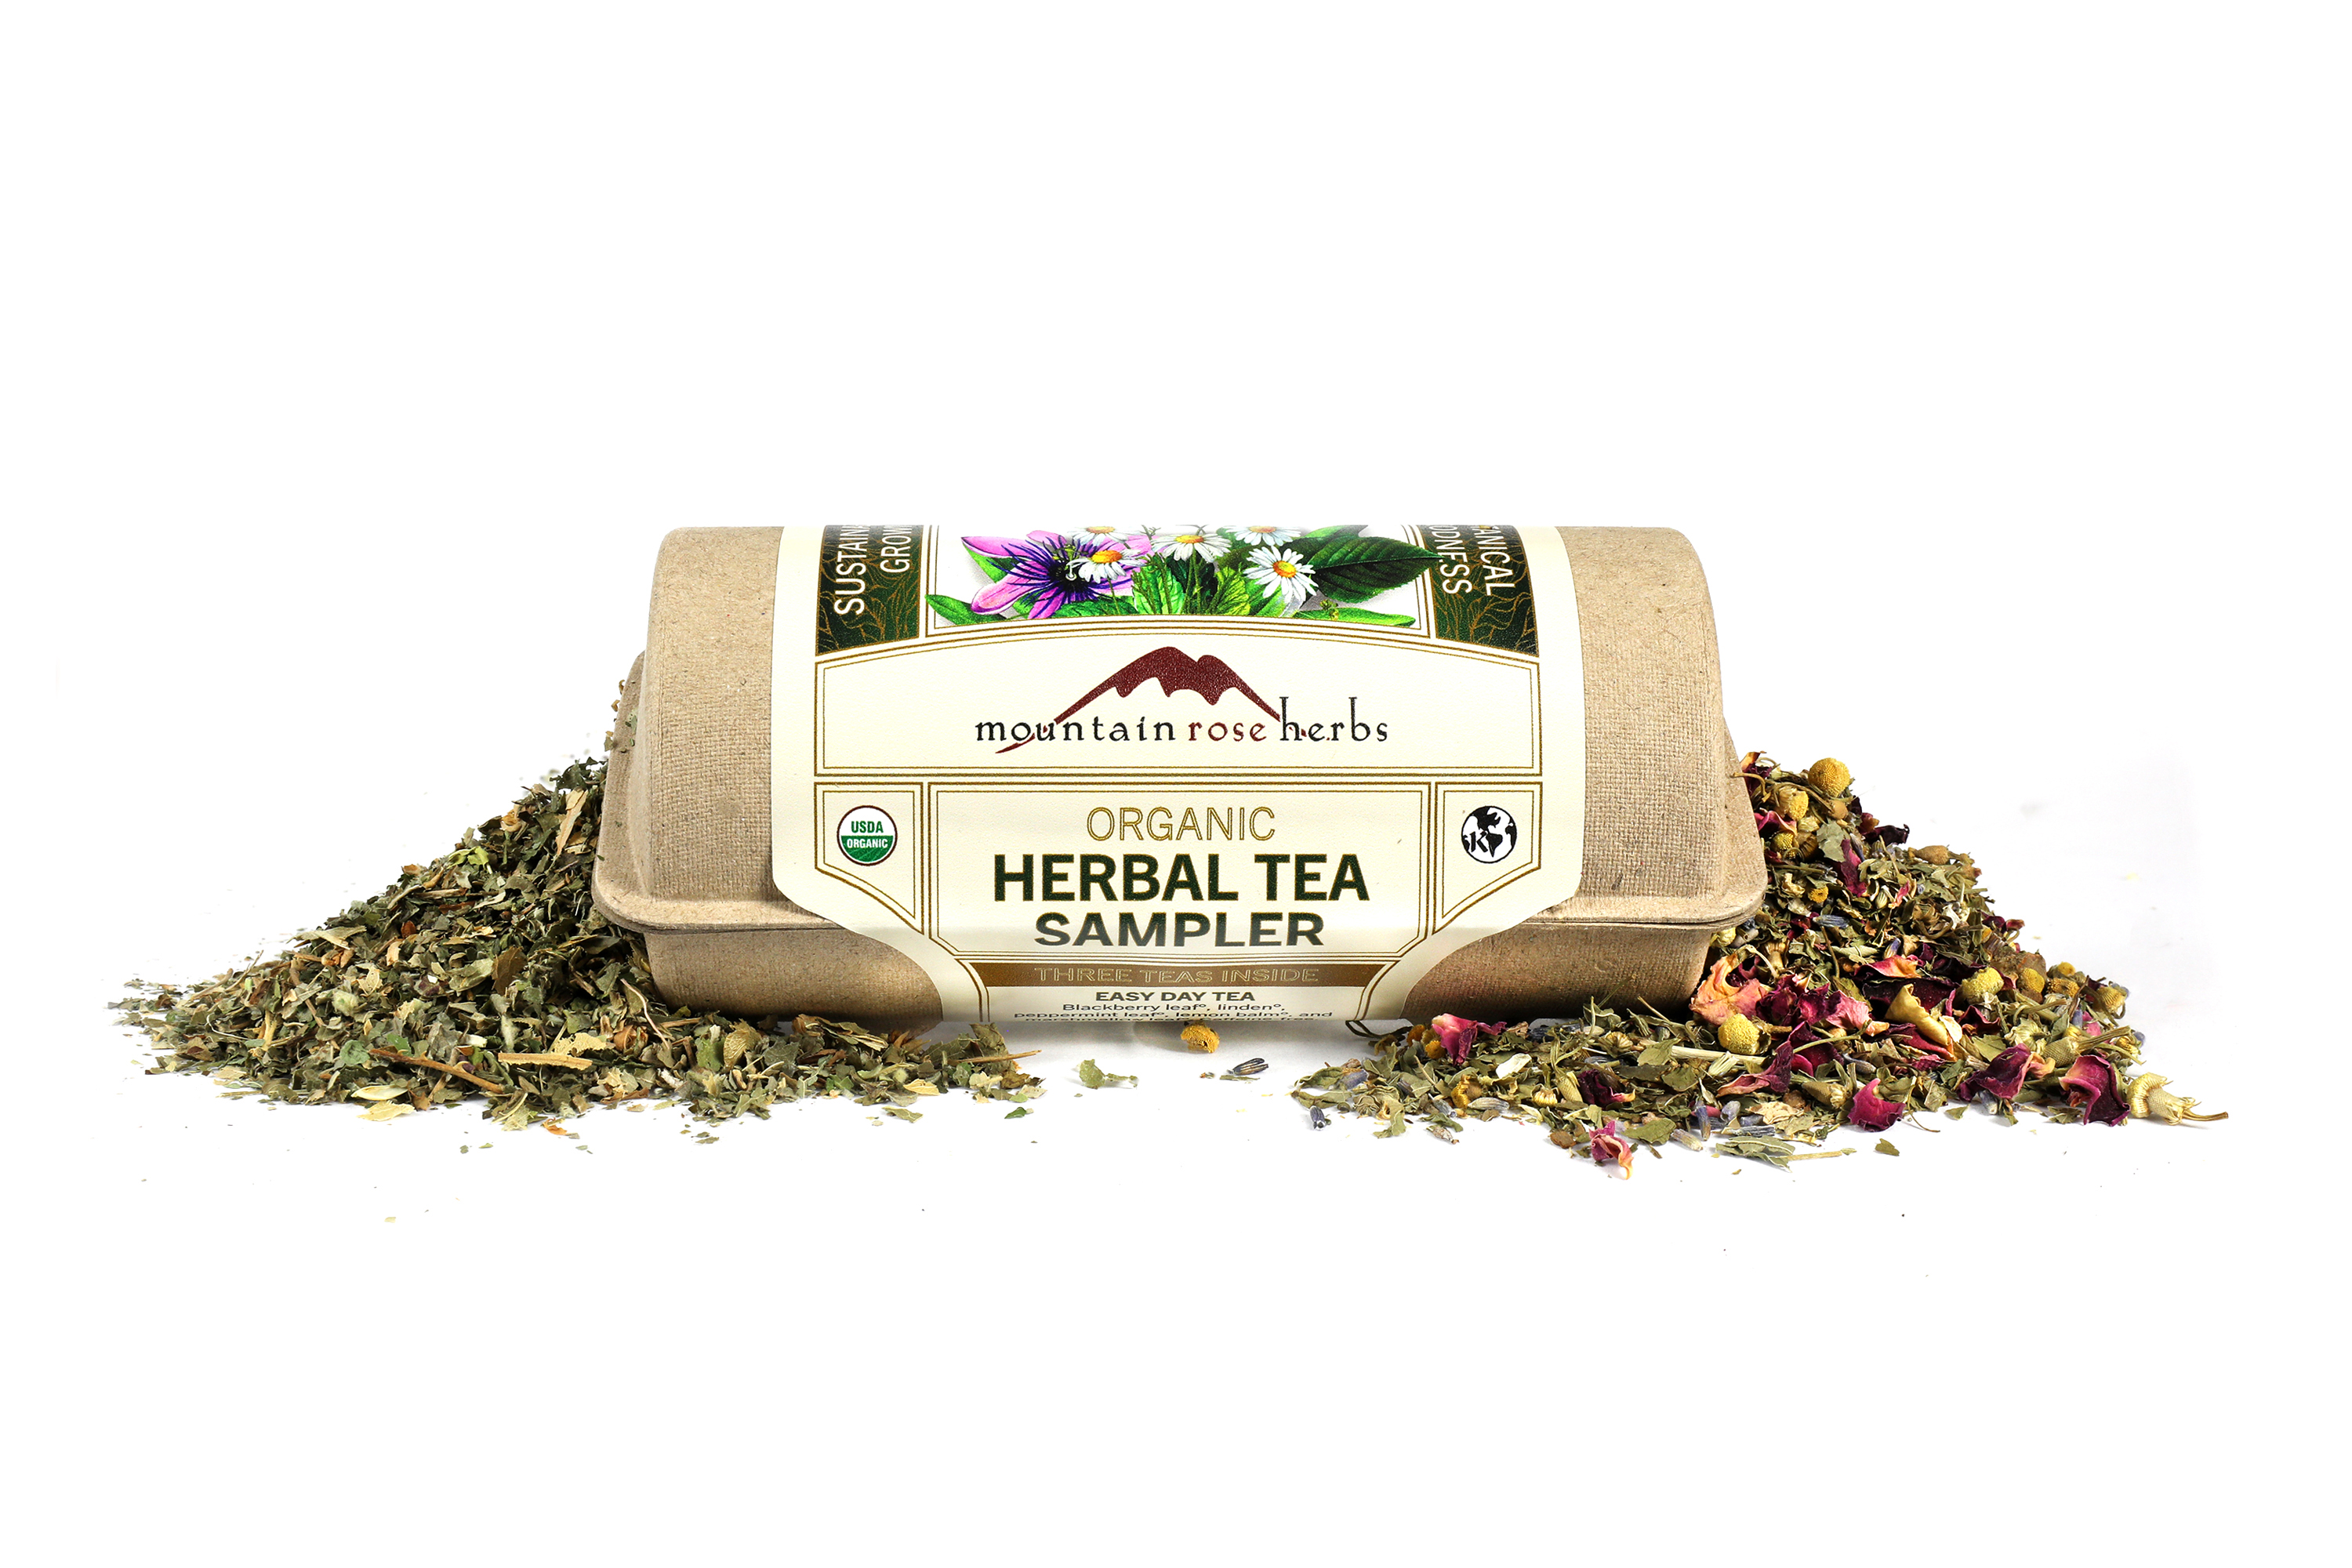 Mountain Rose Herbs x Maeva's Cottage - Dream Blend - Organic Herbal T